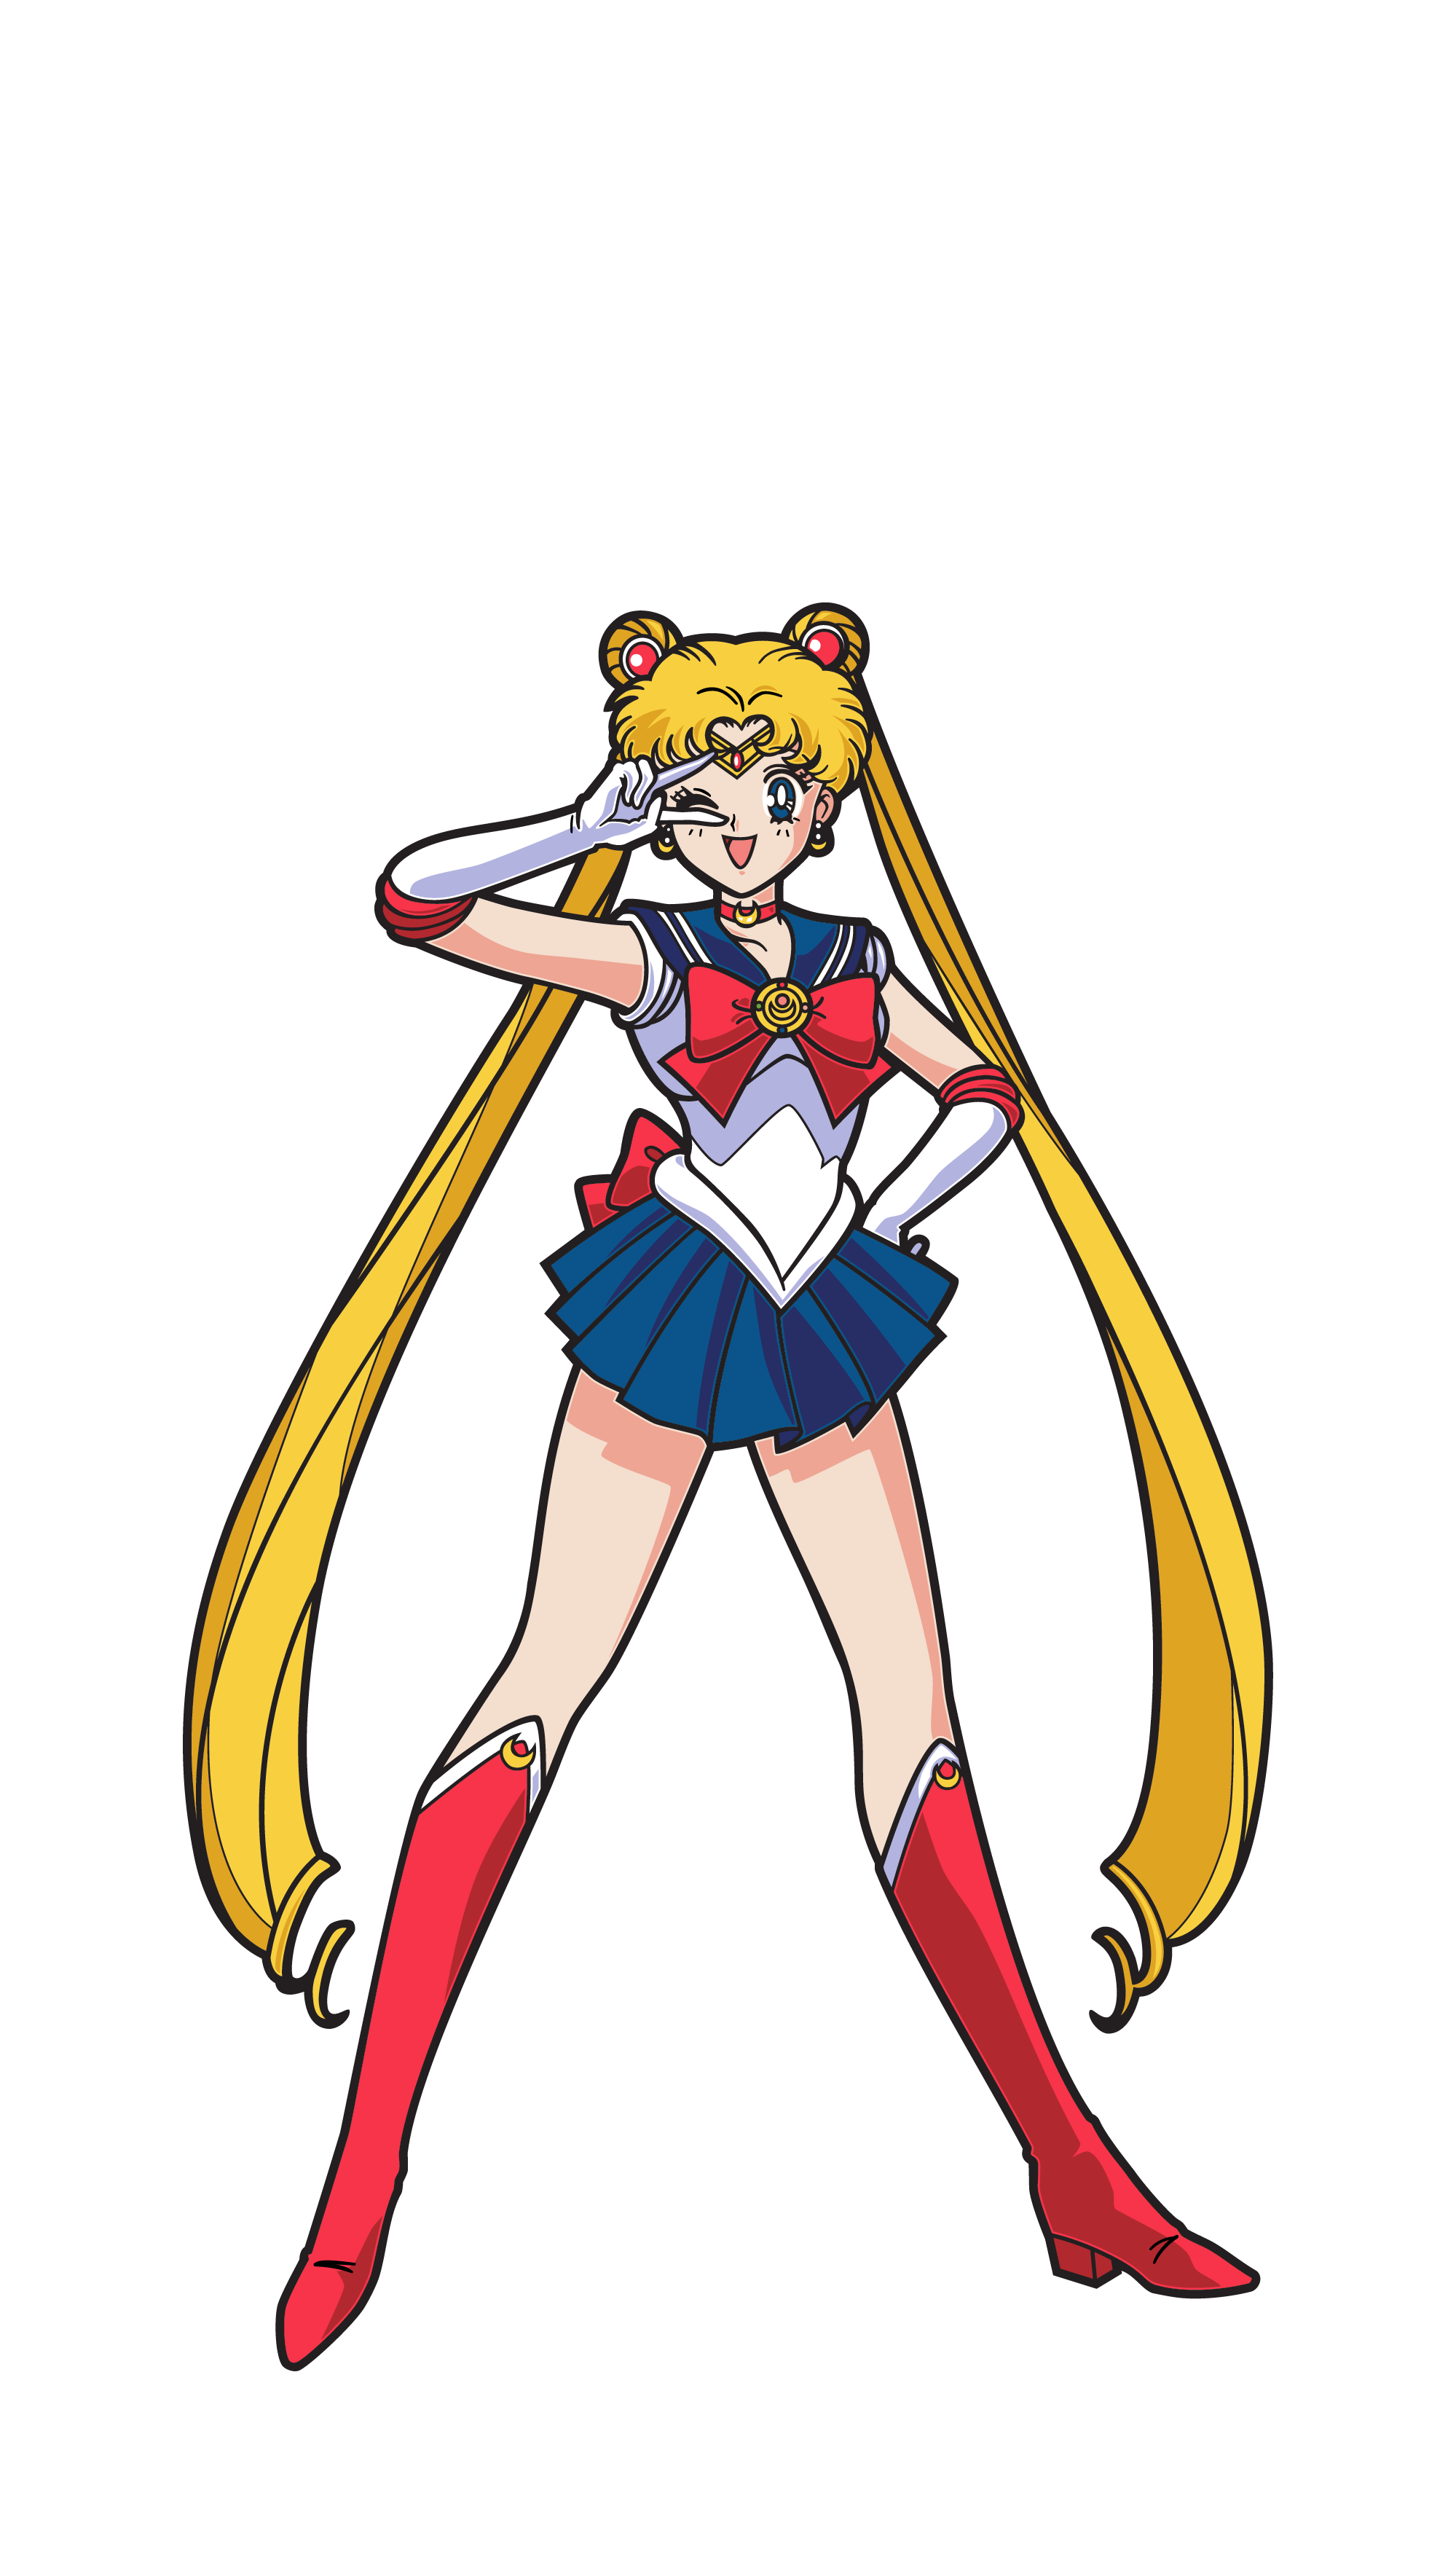 Sailor Moon (925)